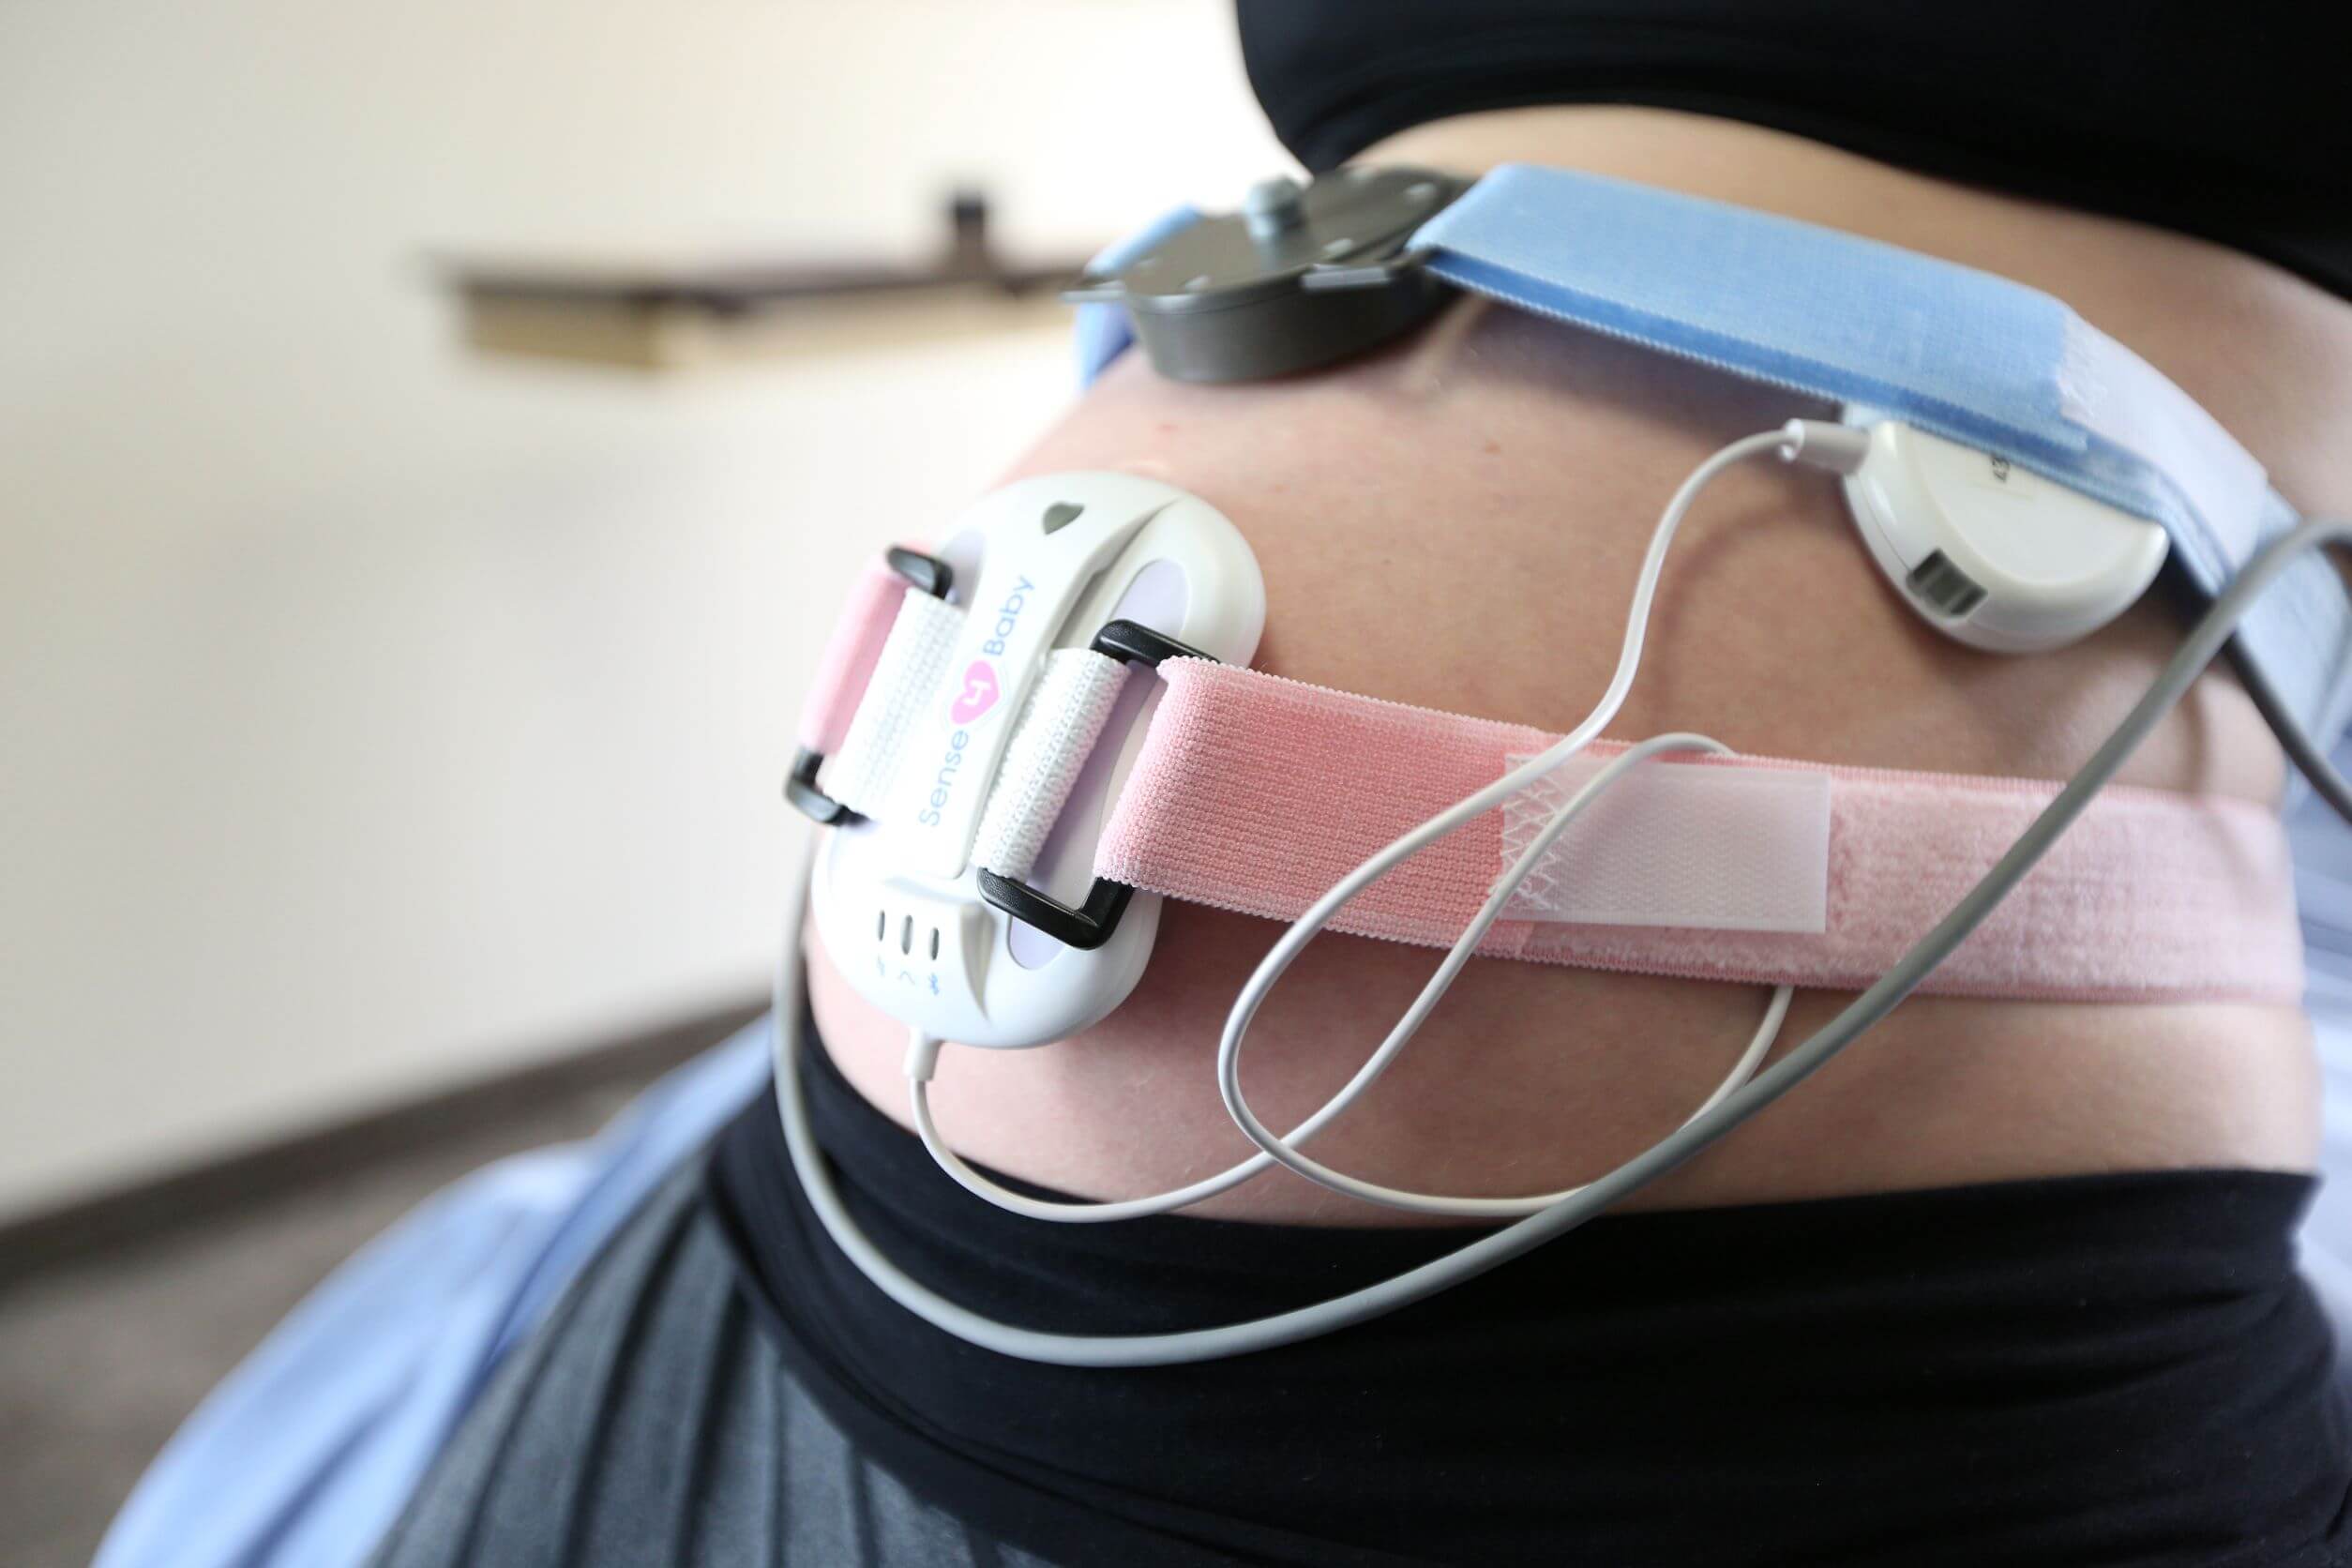 Rijnstate Hospital monitors pregnant women at home using Sense4Baby